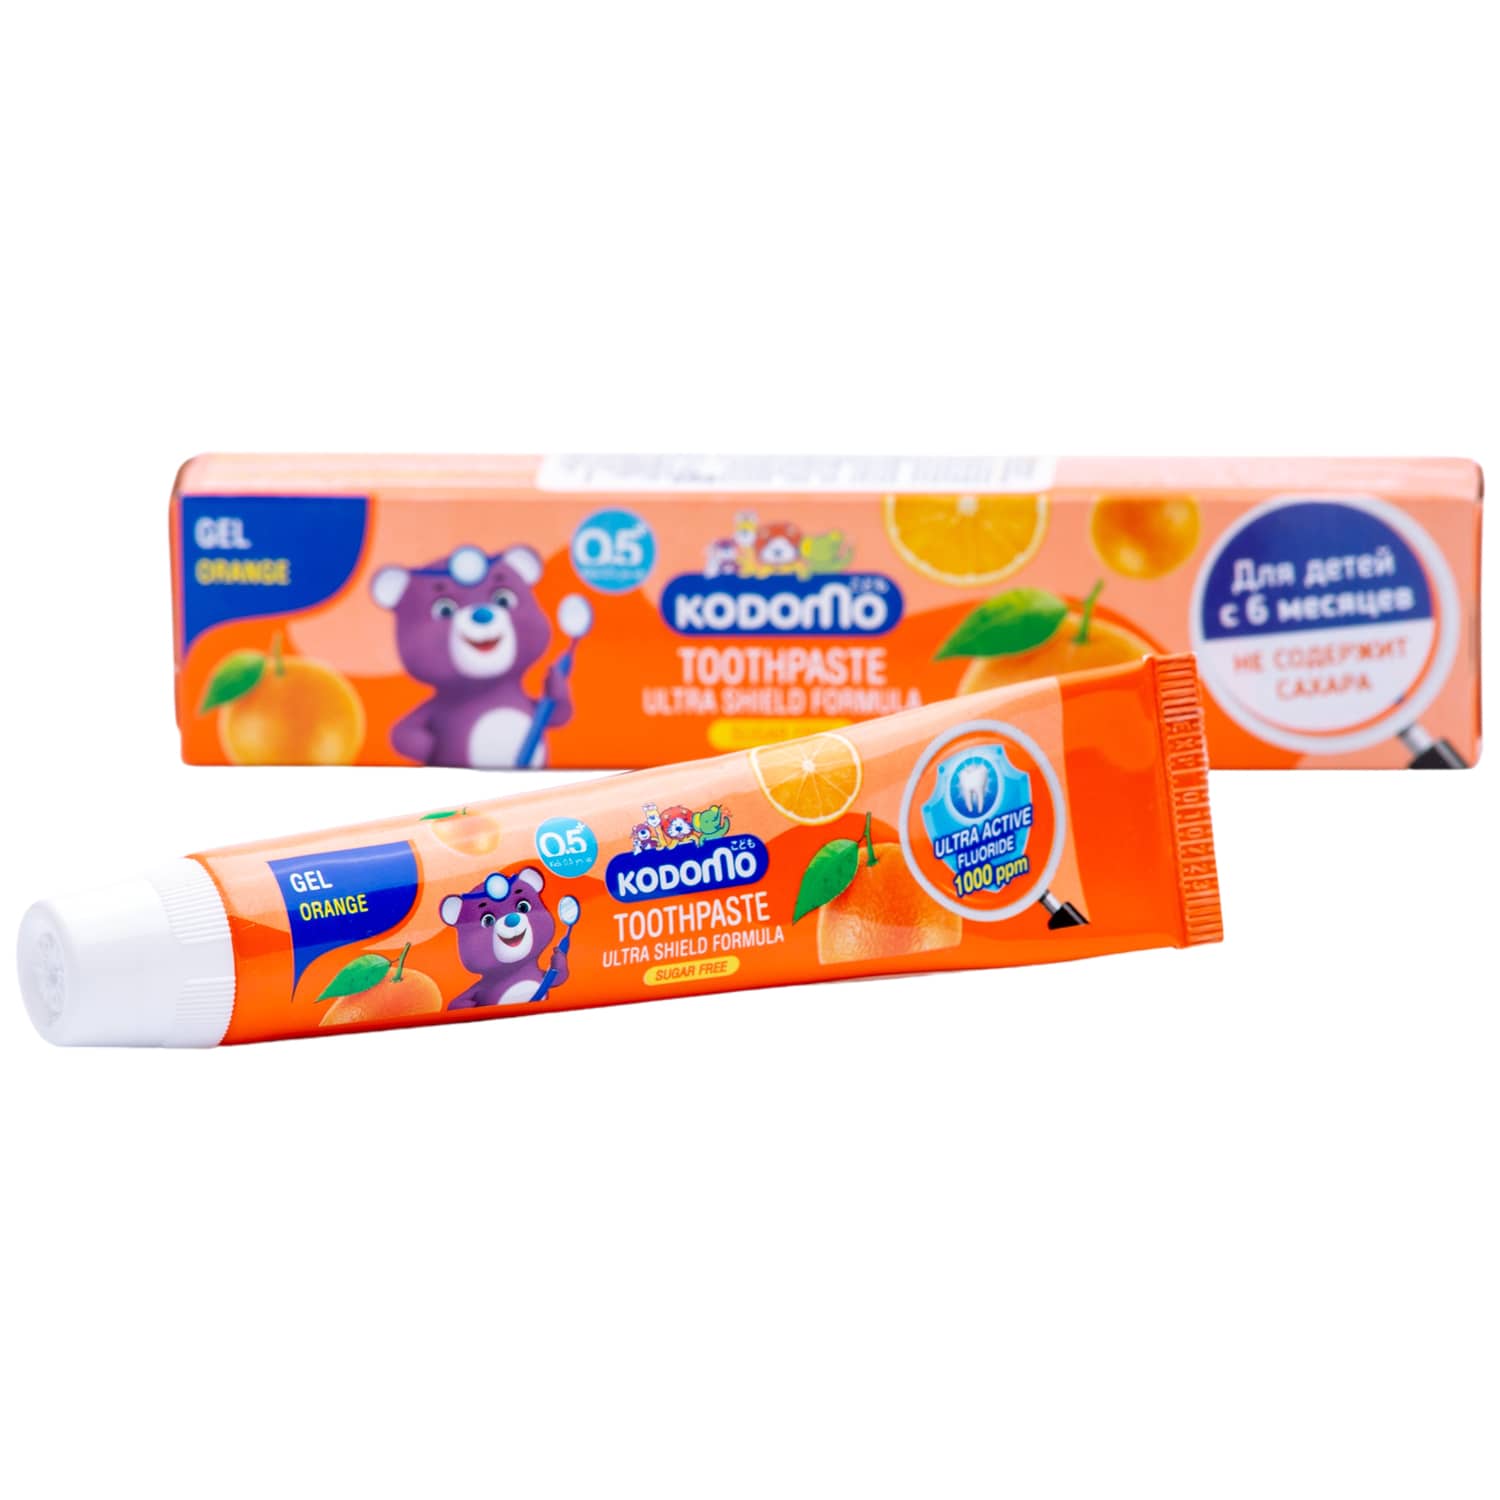 Lion Thailand Зубная гелевая паста для детей с 6 месяцев с ароматом апельсина, 40 г (Lion Thailand, Kodomo) паста зубная kodomo с ароматом клубники для детей с 6 месяцев 40г